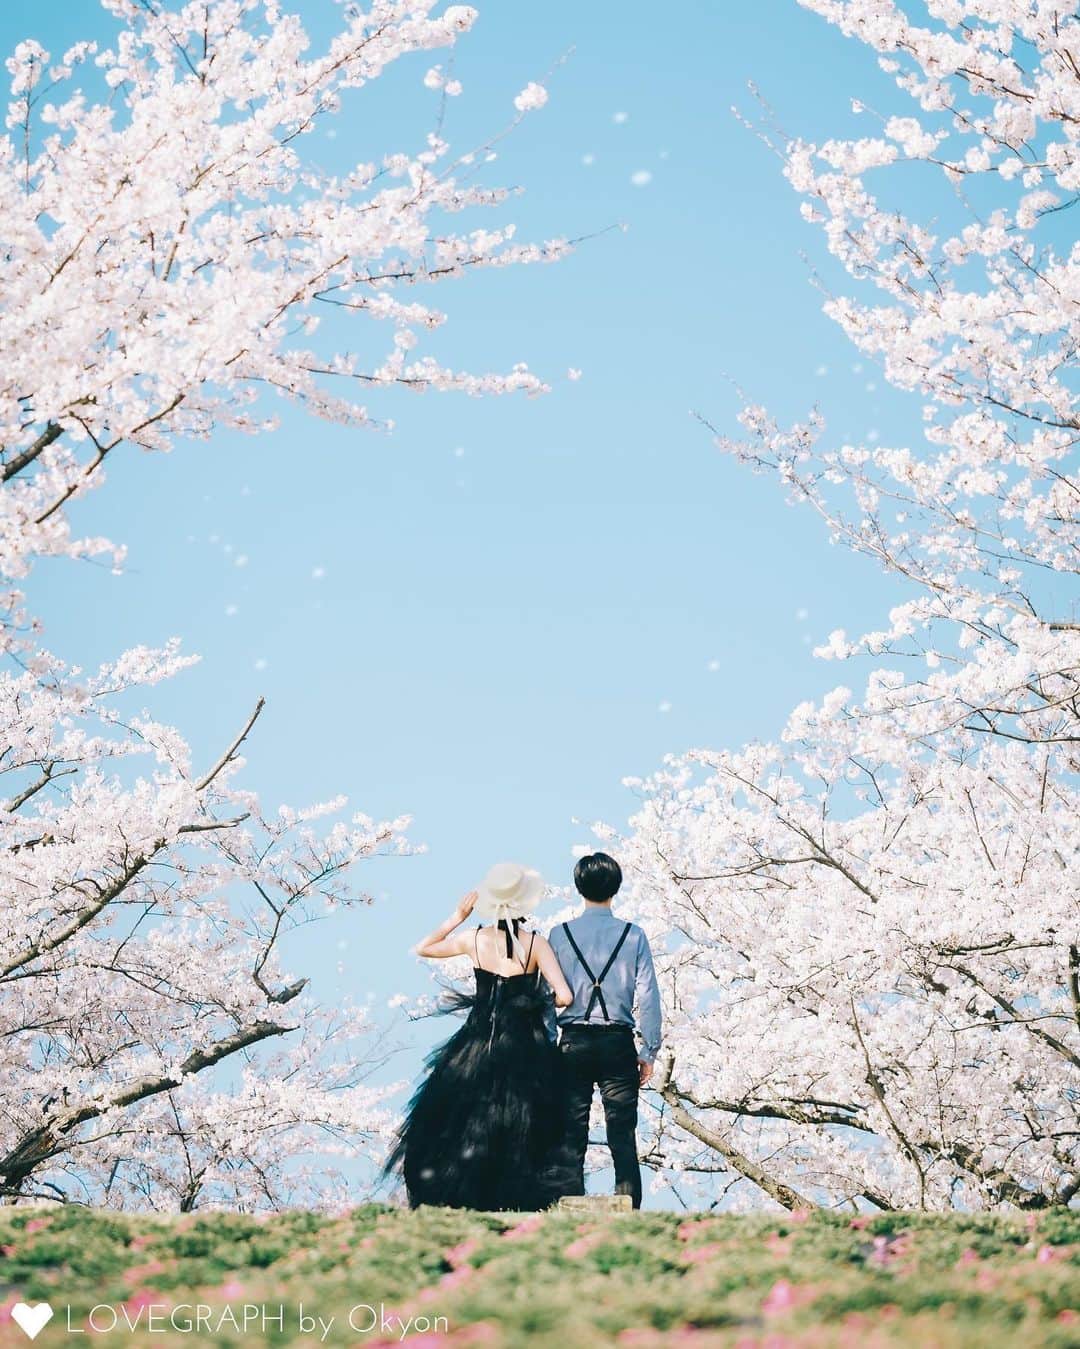 Lovegraph［ラブグラフ］のインスタグラム：「ㅤㅤㅤㅤㅤㅤㅤㅤㅤ桜の季節のウェディングフォトが美しすぎる。🌸  ୨୧┈┈┈┈୨୧ ㅤㅤㅤㅤㅤㅤ 出張撮影Lovegraphの公式アカウントです❁︎ ㅤㅤㅤ カップル・ウェディング・ファミリー・プロフィール写真など様々なジャンルの撮影を受付中📸💫 ㅤㅤㅤ 撮影予約はプロフィールURLからどうぞ☺️✈️ @lovegraph_me ㅤㅤㅤ ୨୧┈┈┈┈୨୧ ㅤㅤㅤ #Lovegraph #ラブグラフ #幸せな瞬間をもっと世界に ㅤㅤㅤ  #出張カメラマン #ロケーションフォト #桜前撮り #ウェディングフォト #ブラックドレス #前撮りポーズ」